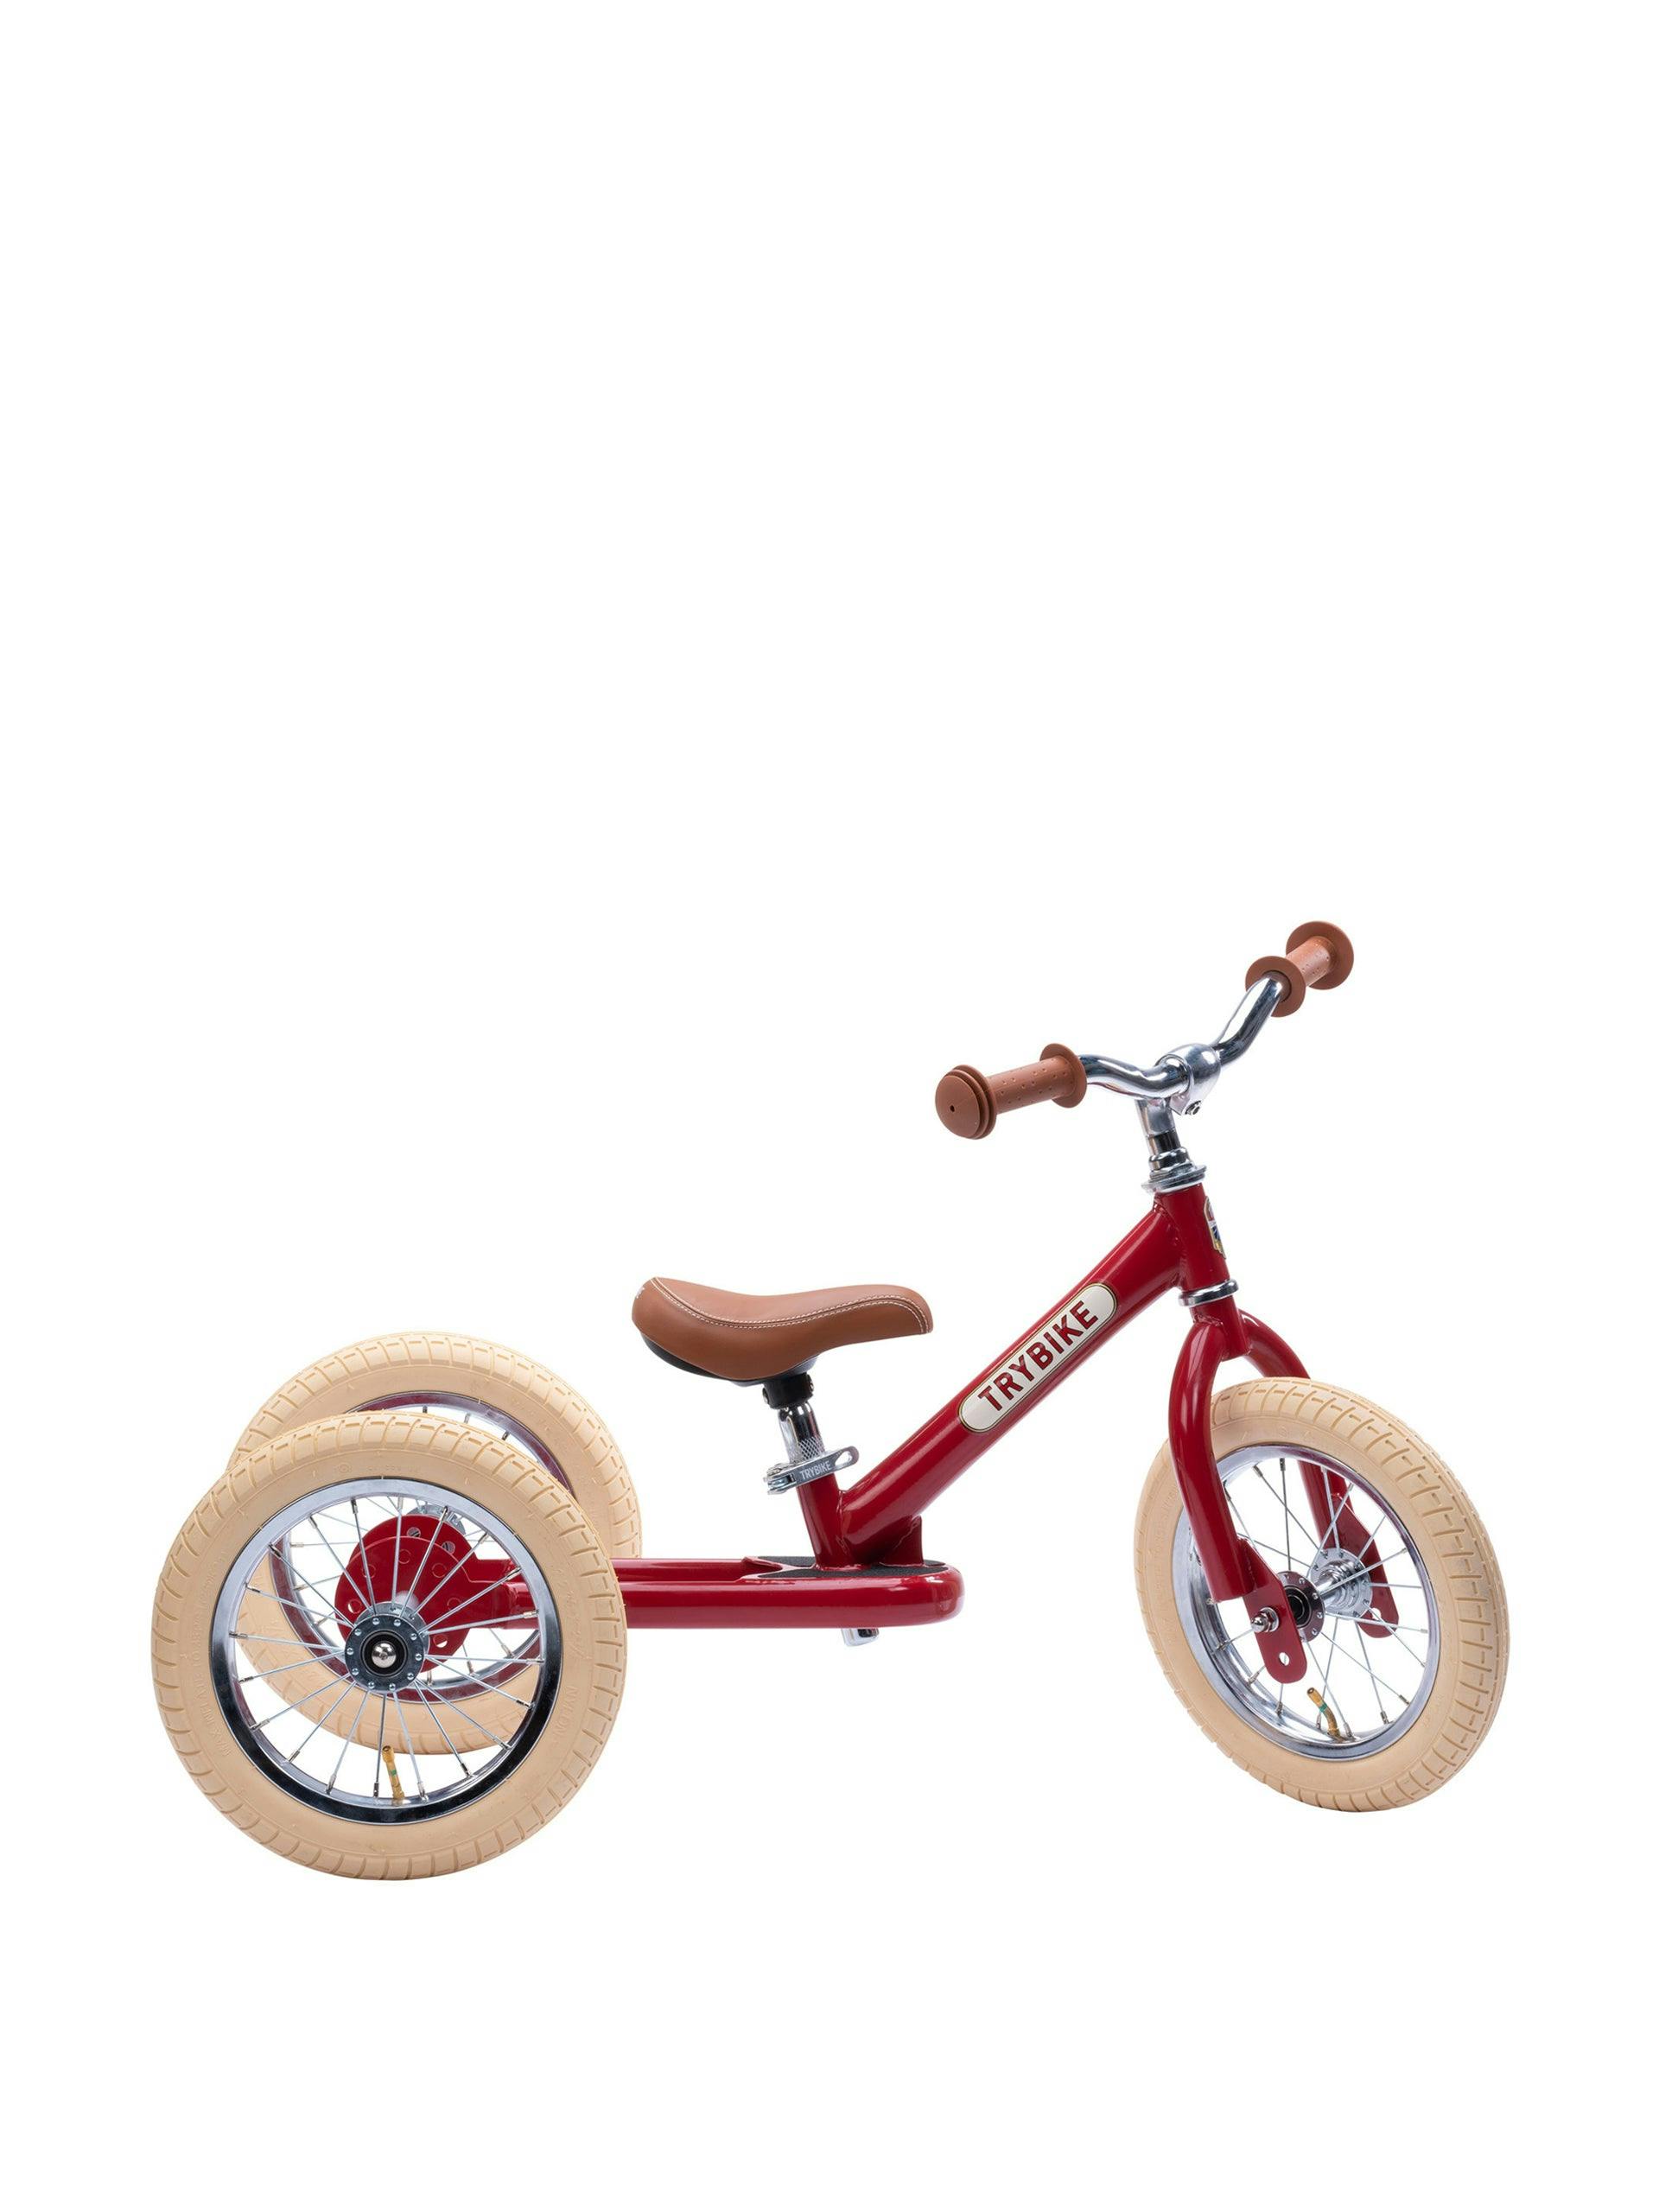 Red tricycle balance bike